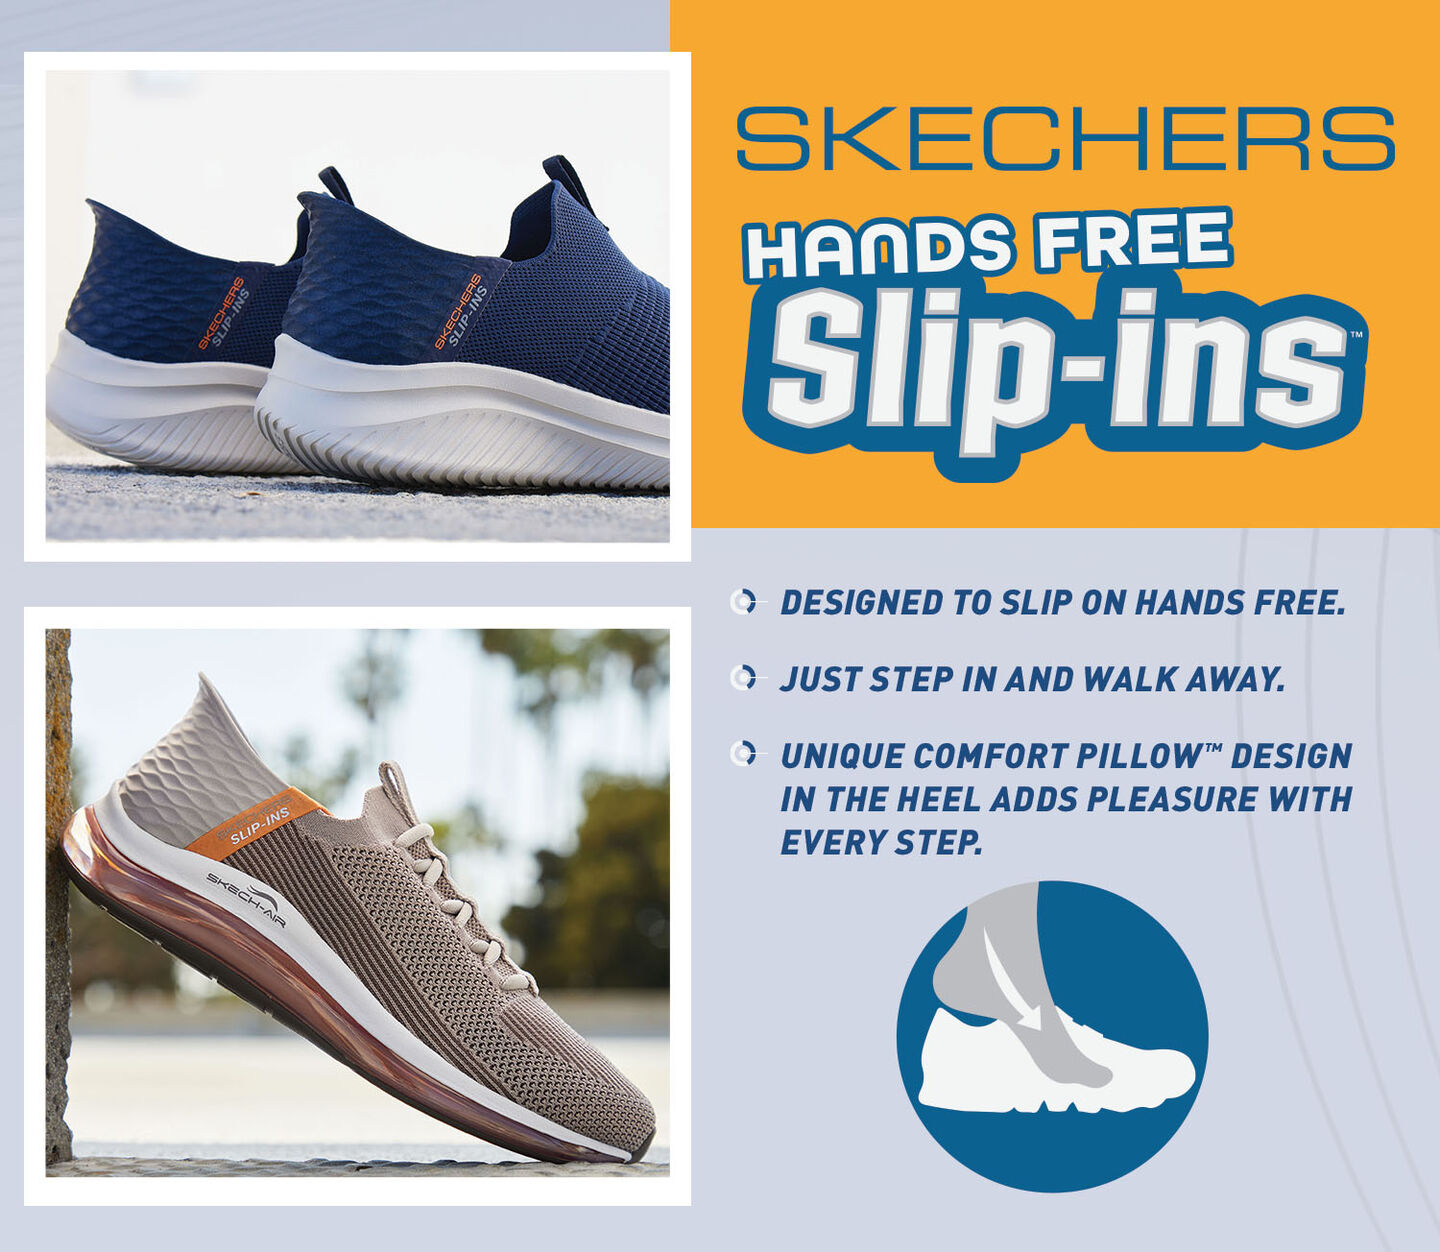 Skechers Hands Free Slip-ins image